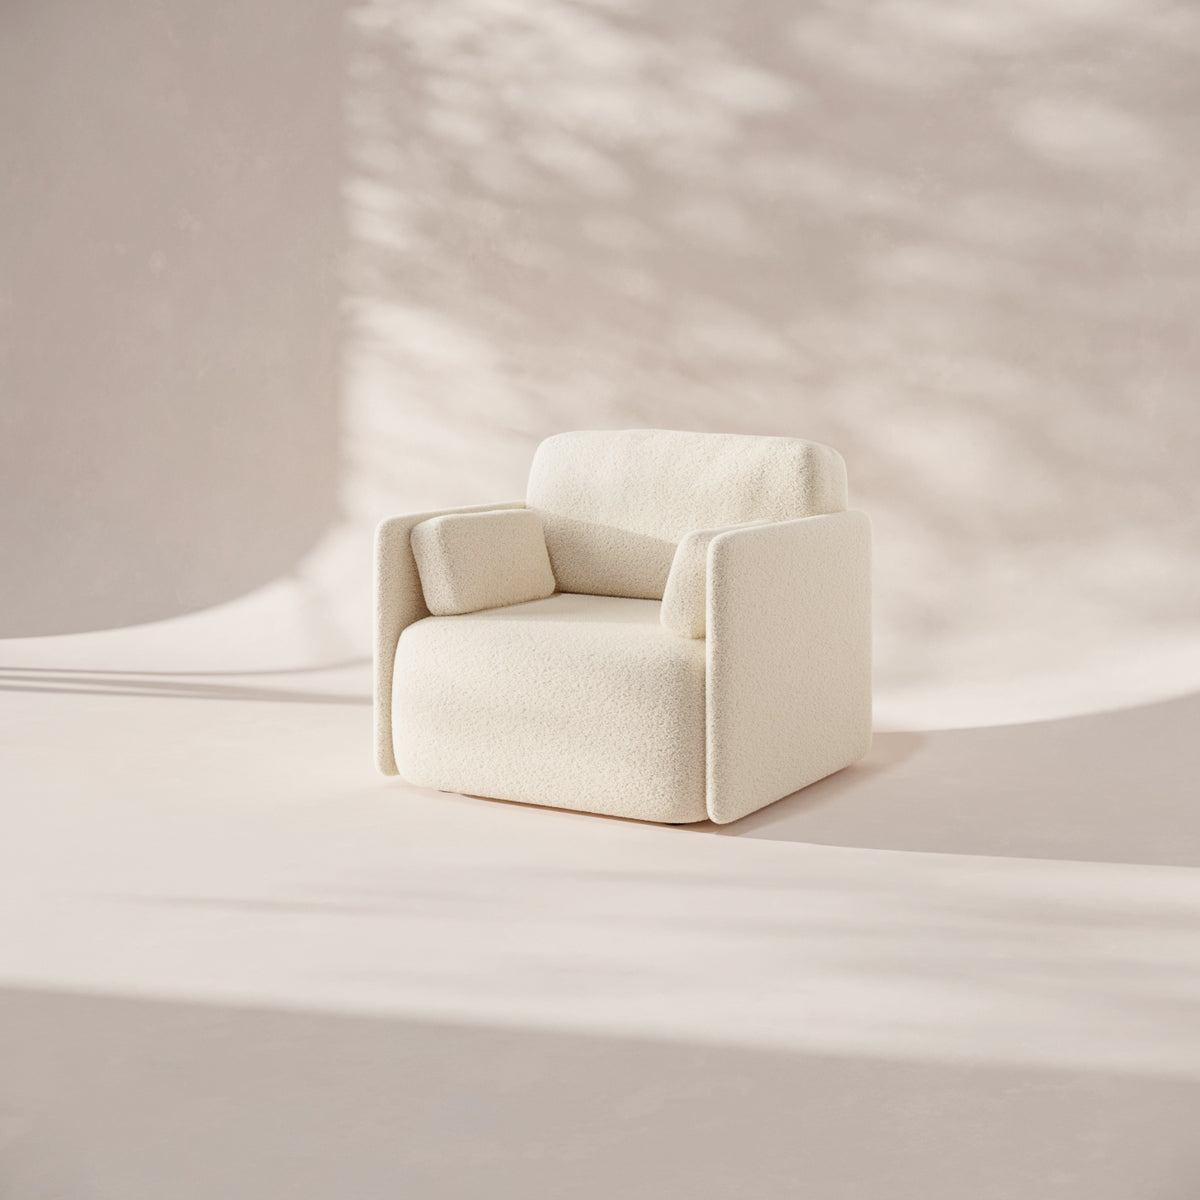 White sofa cushion